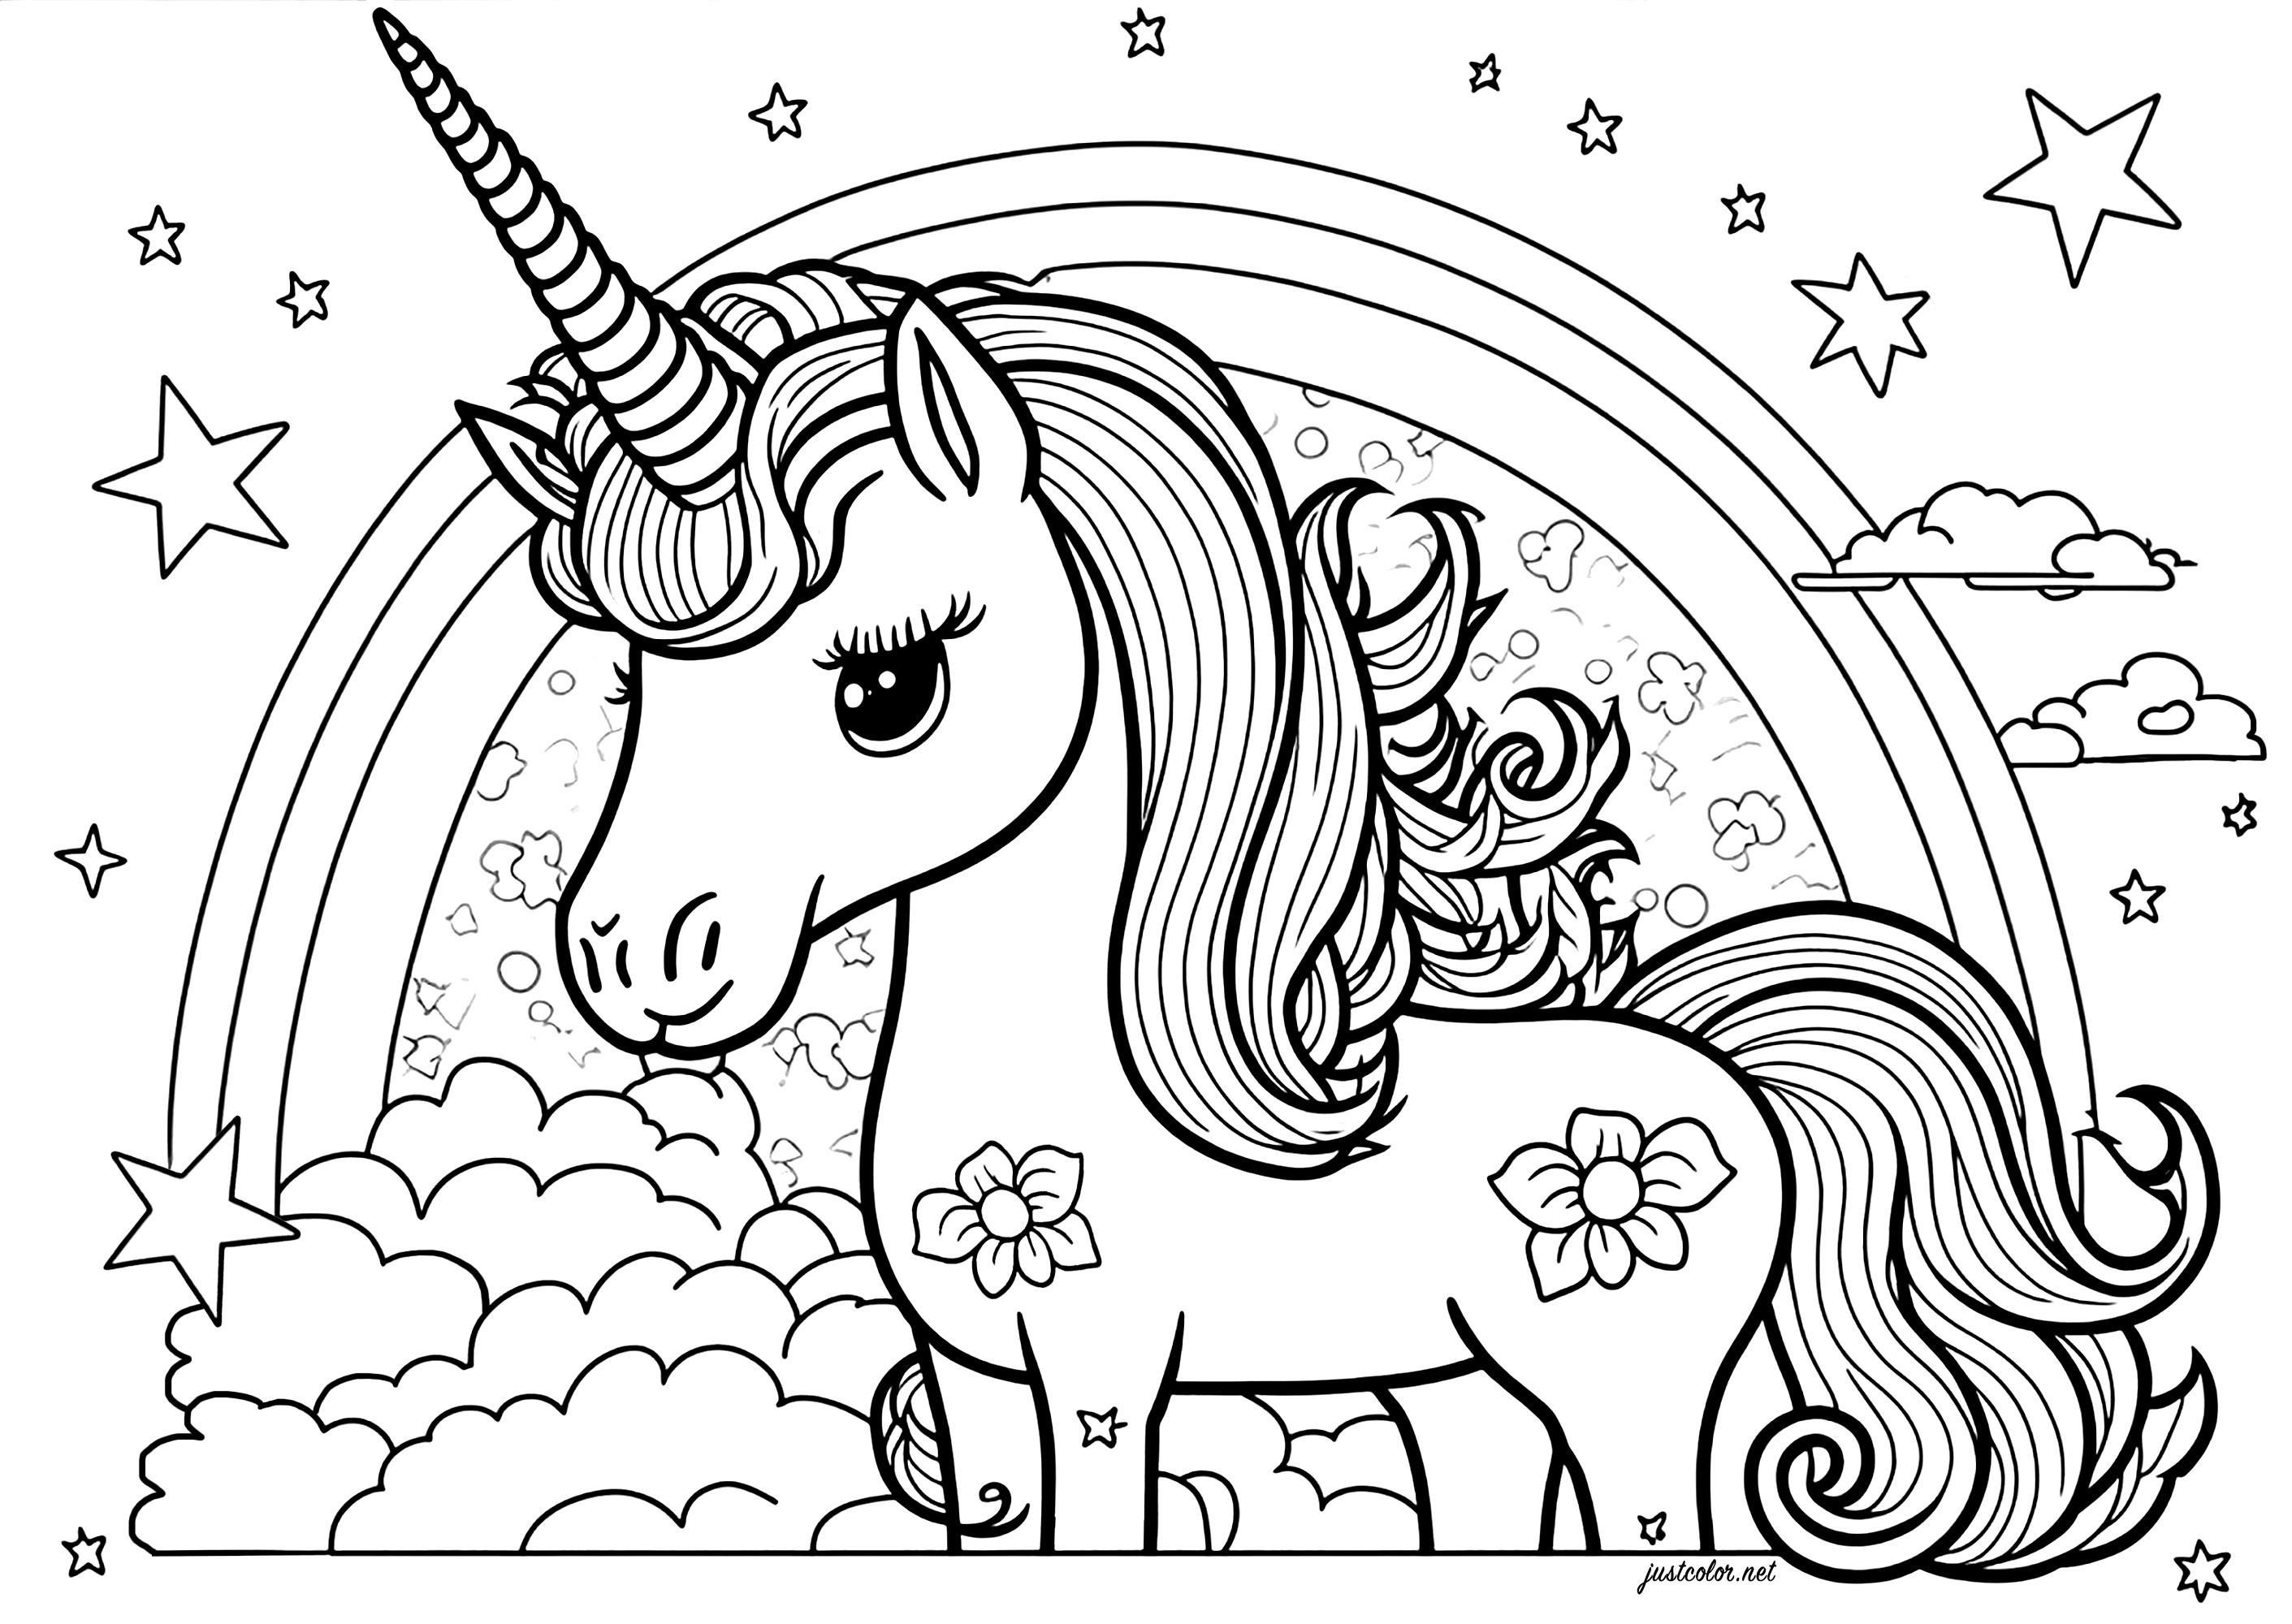 Colorear un hermoso unicornio delante de un arco iris